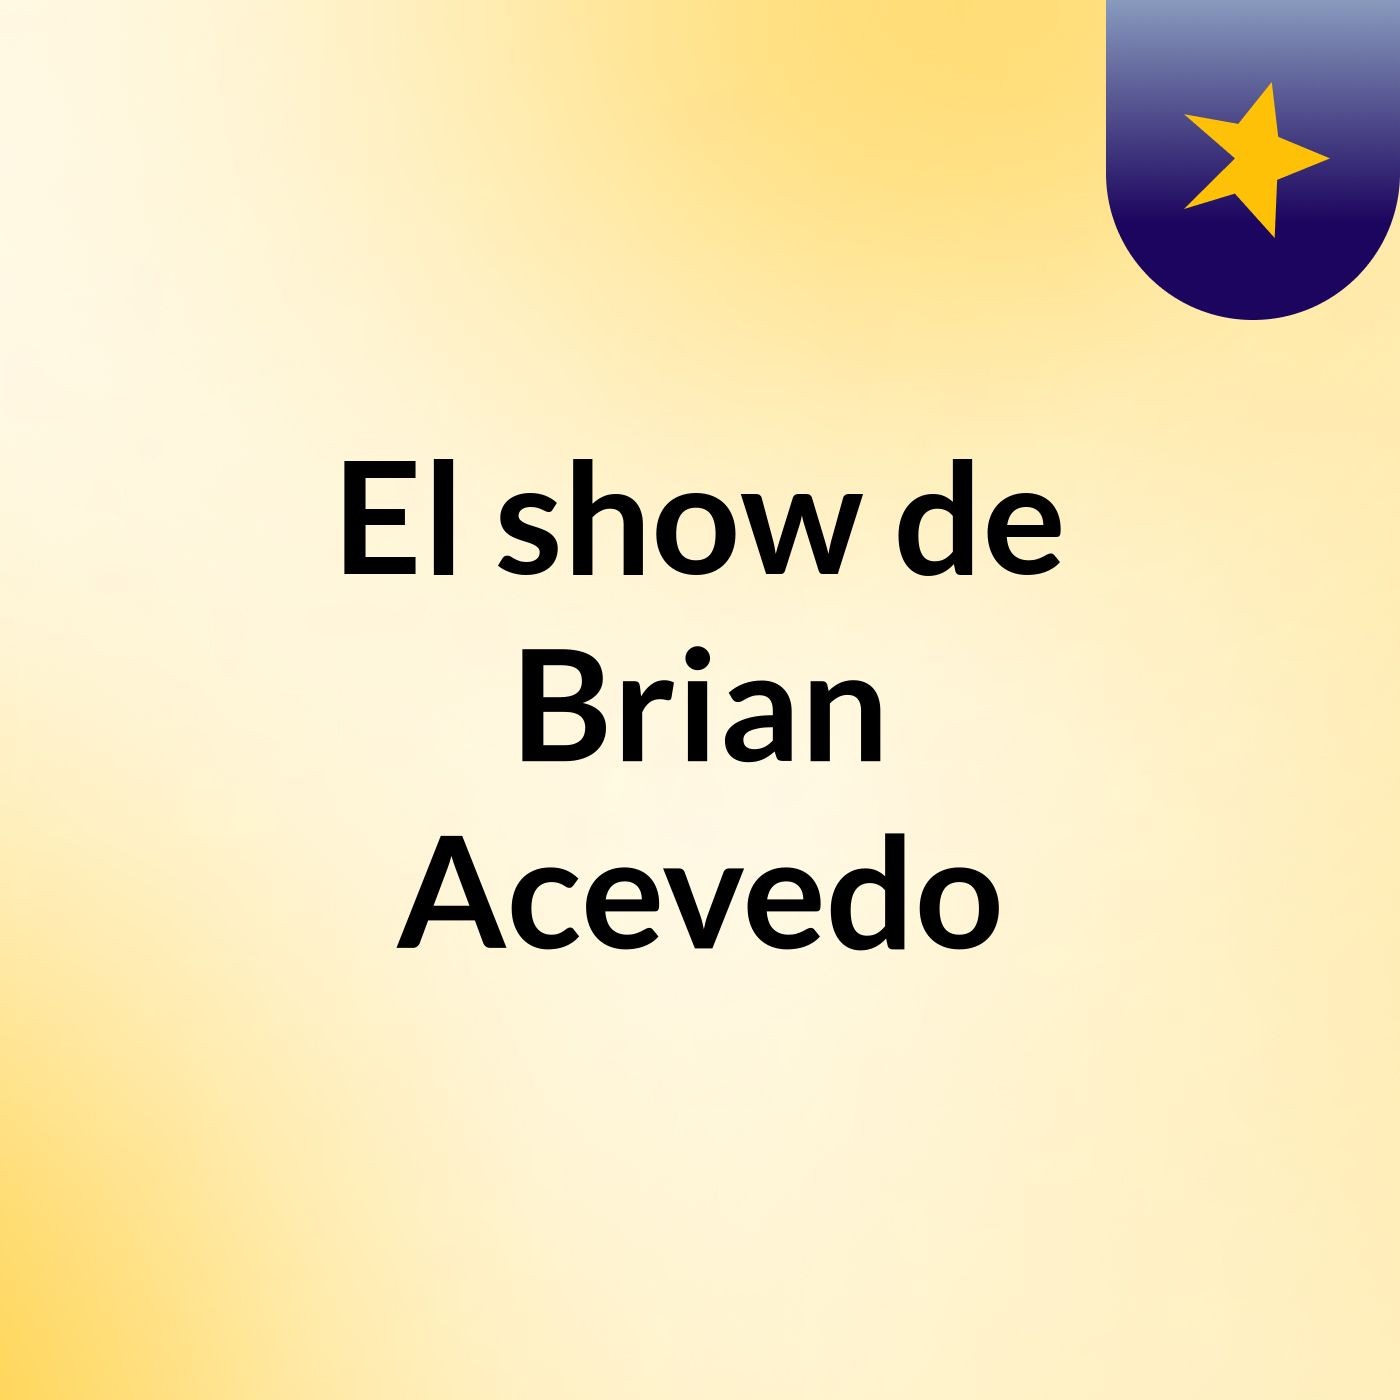 El show de Brian Acevedo